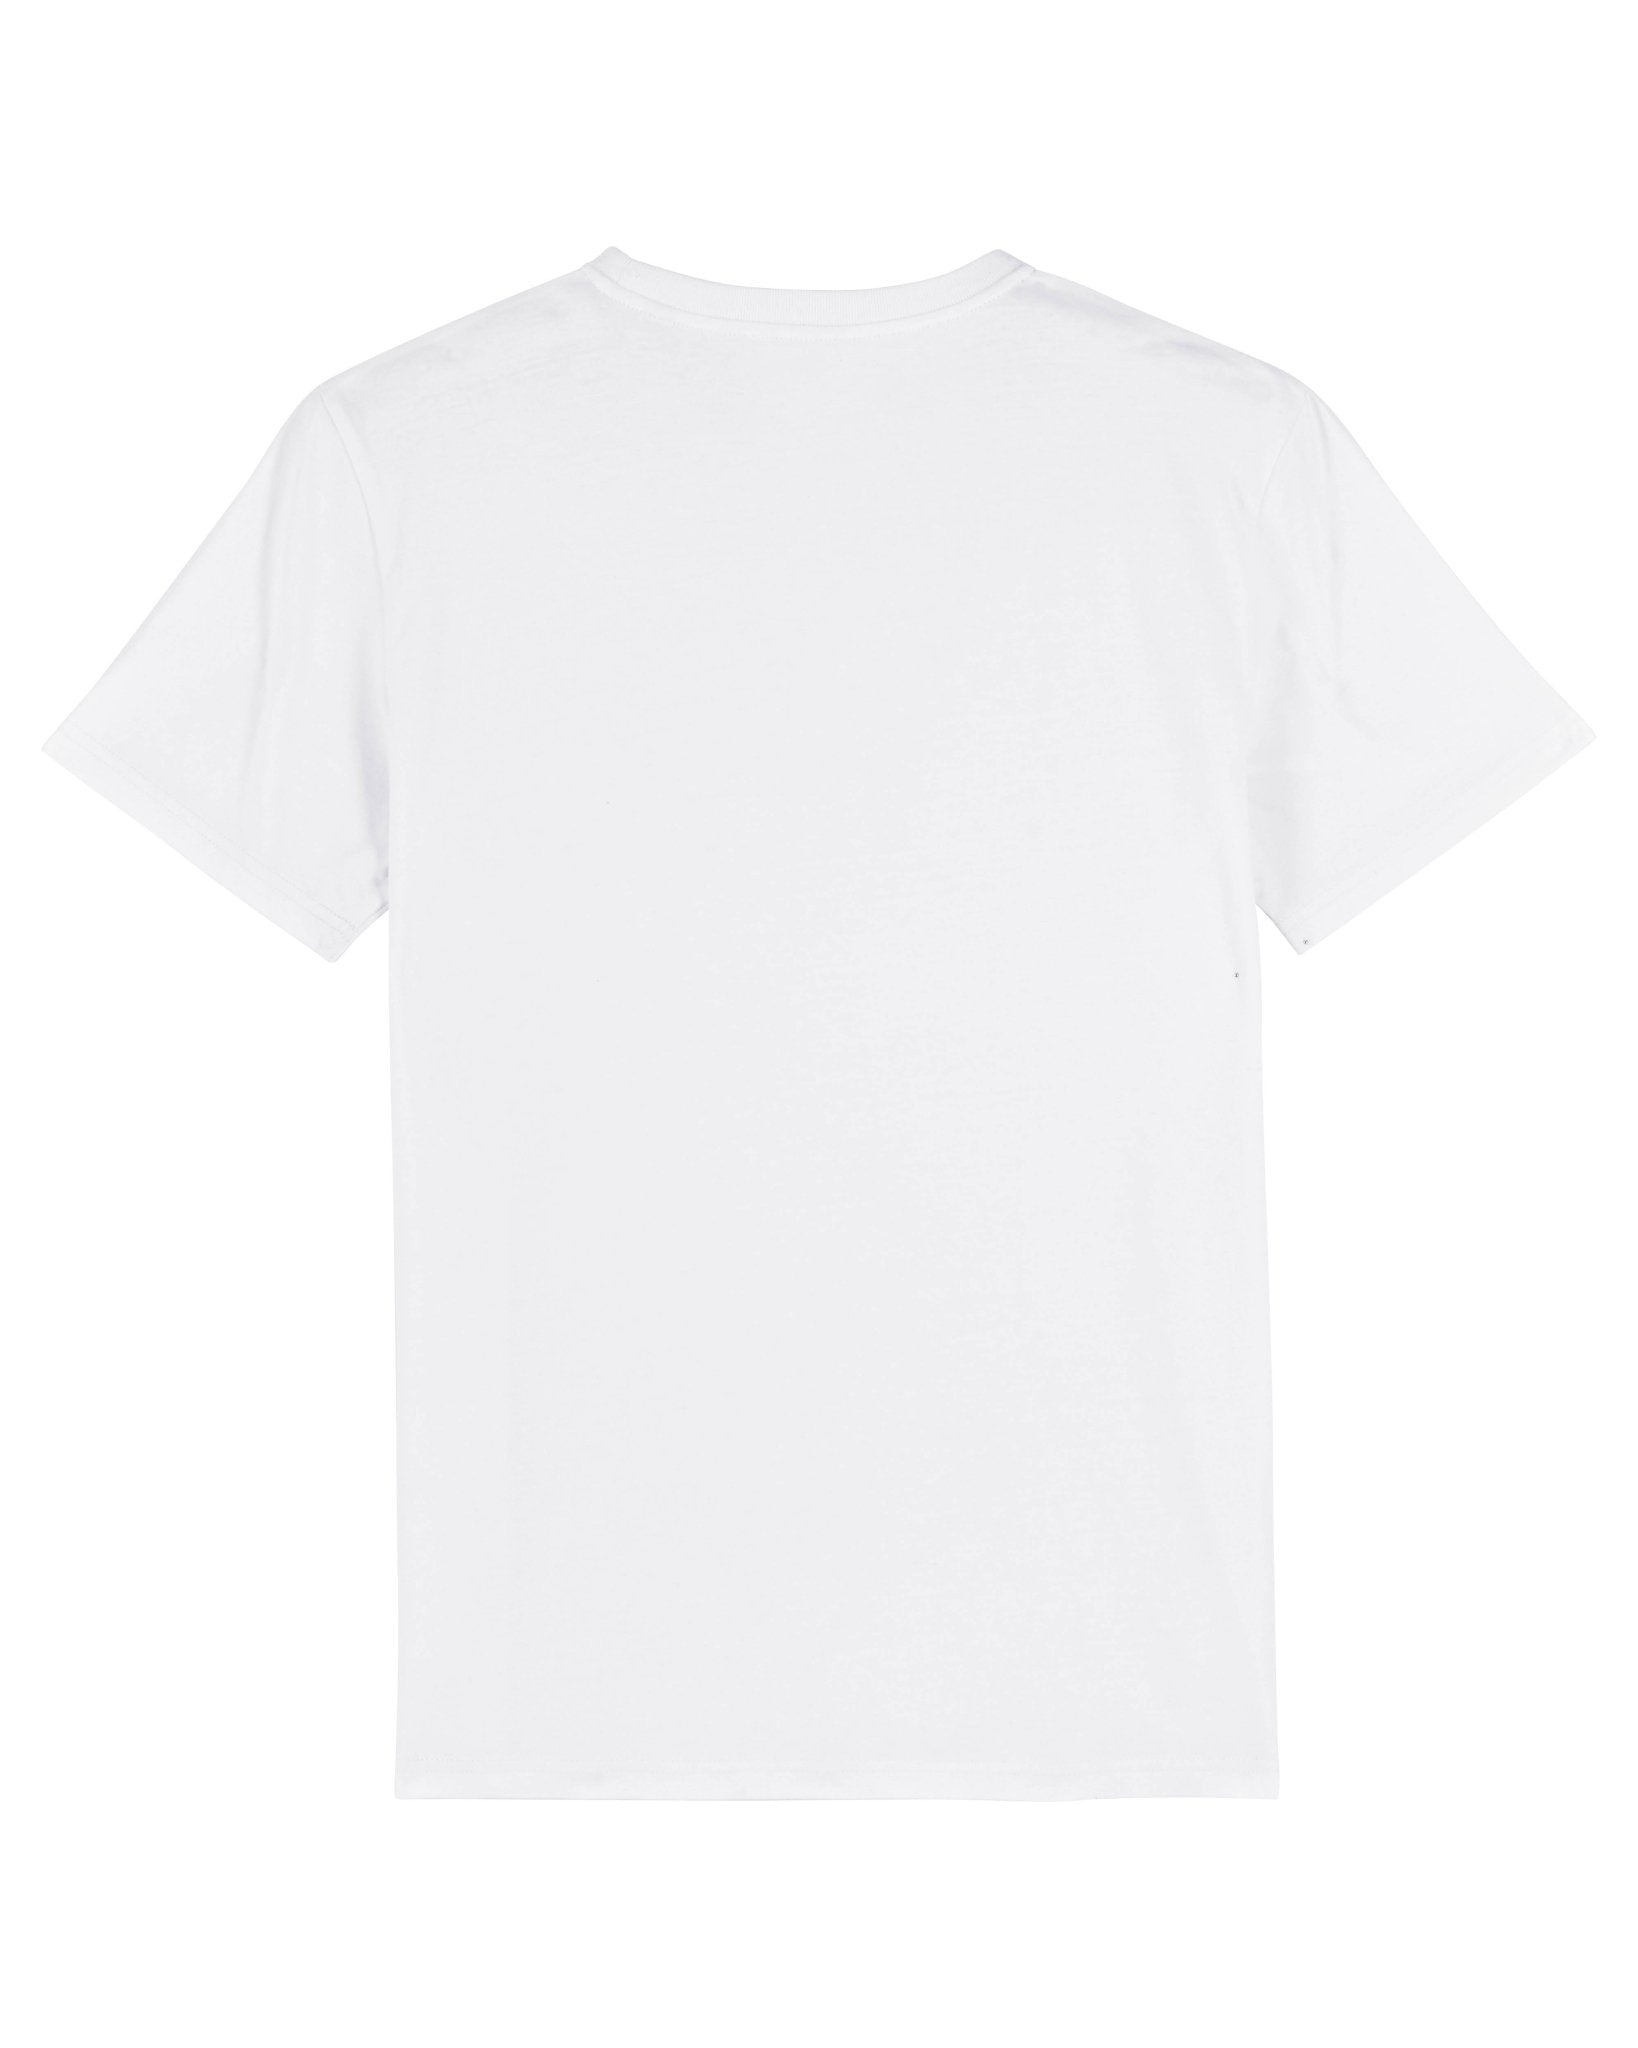 Organic T-Shirt BUCHSTABE I | unisex | small print - Studio Schön®